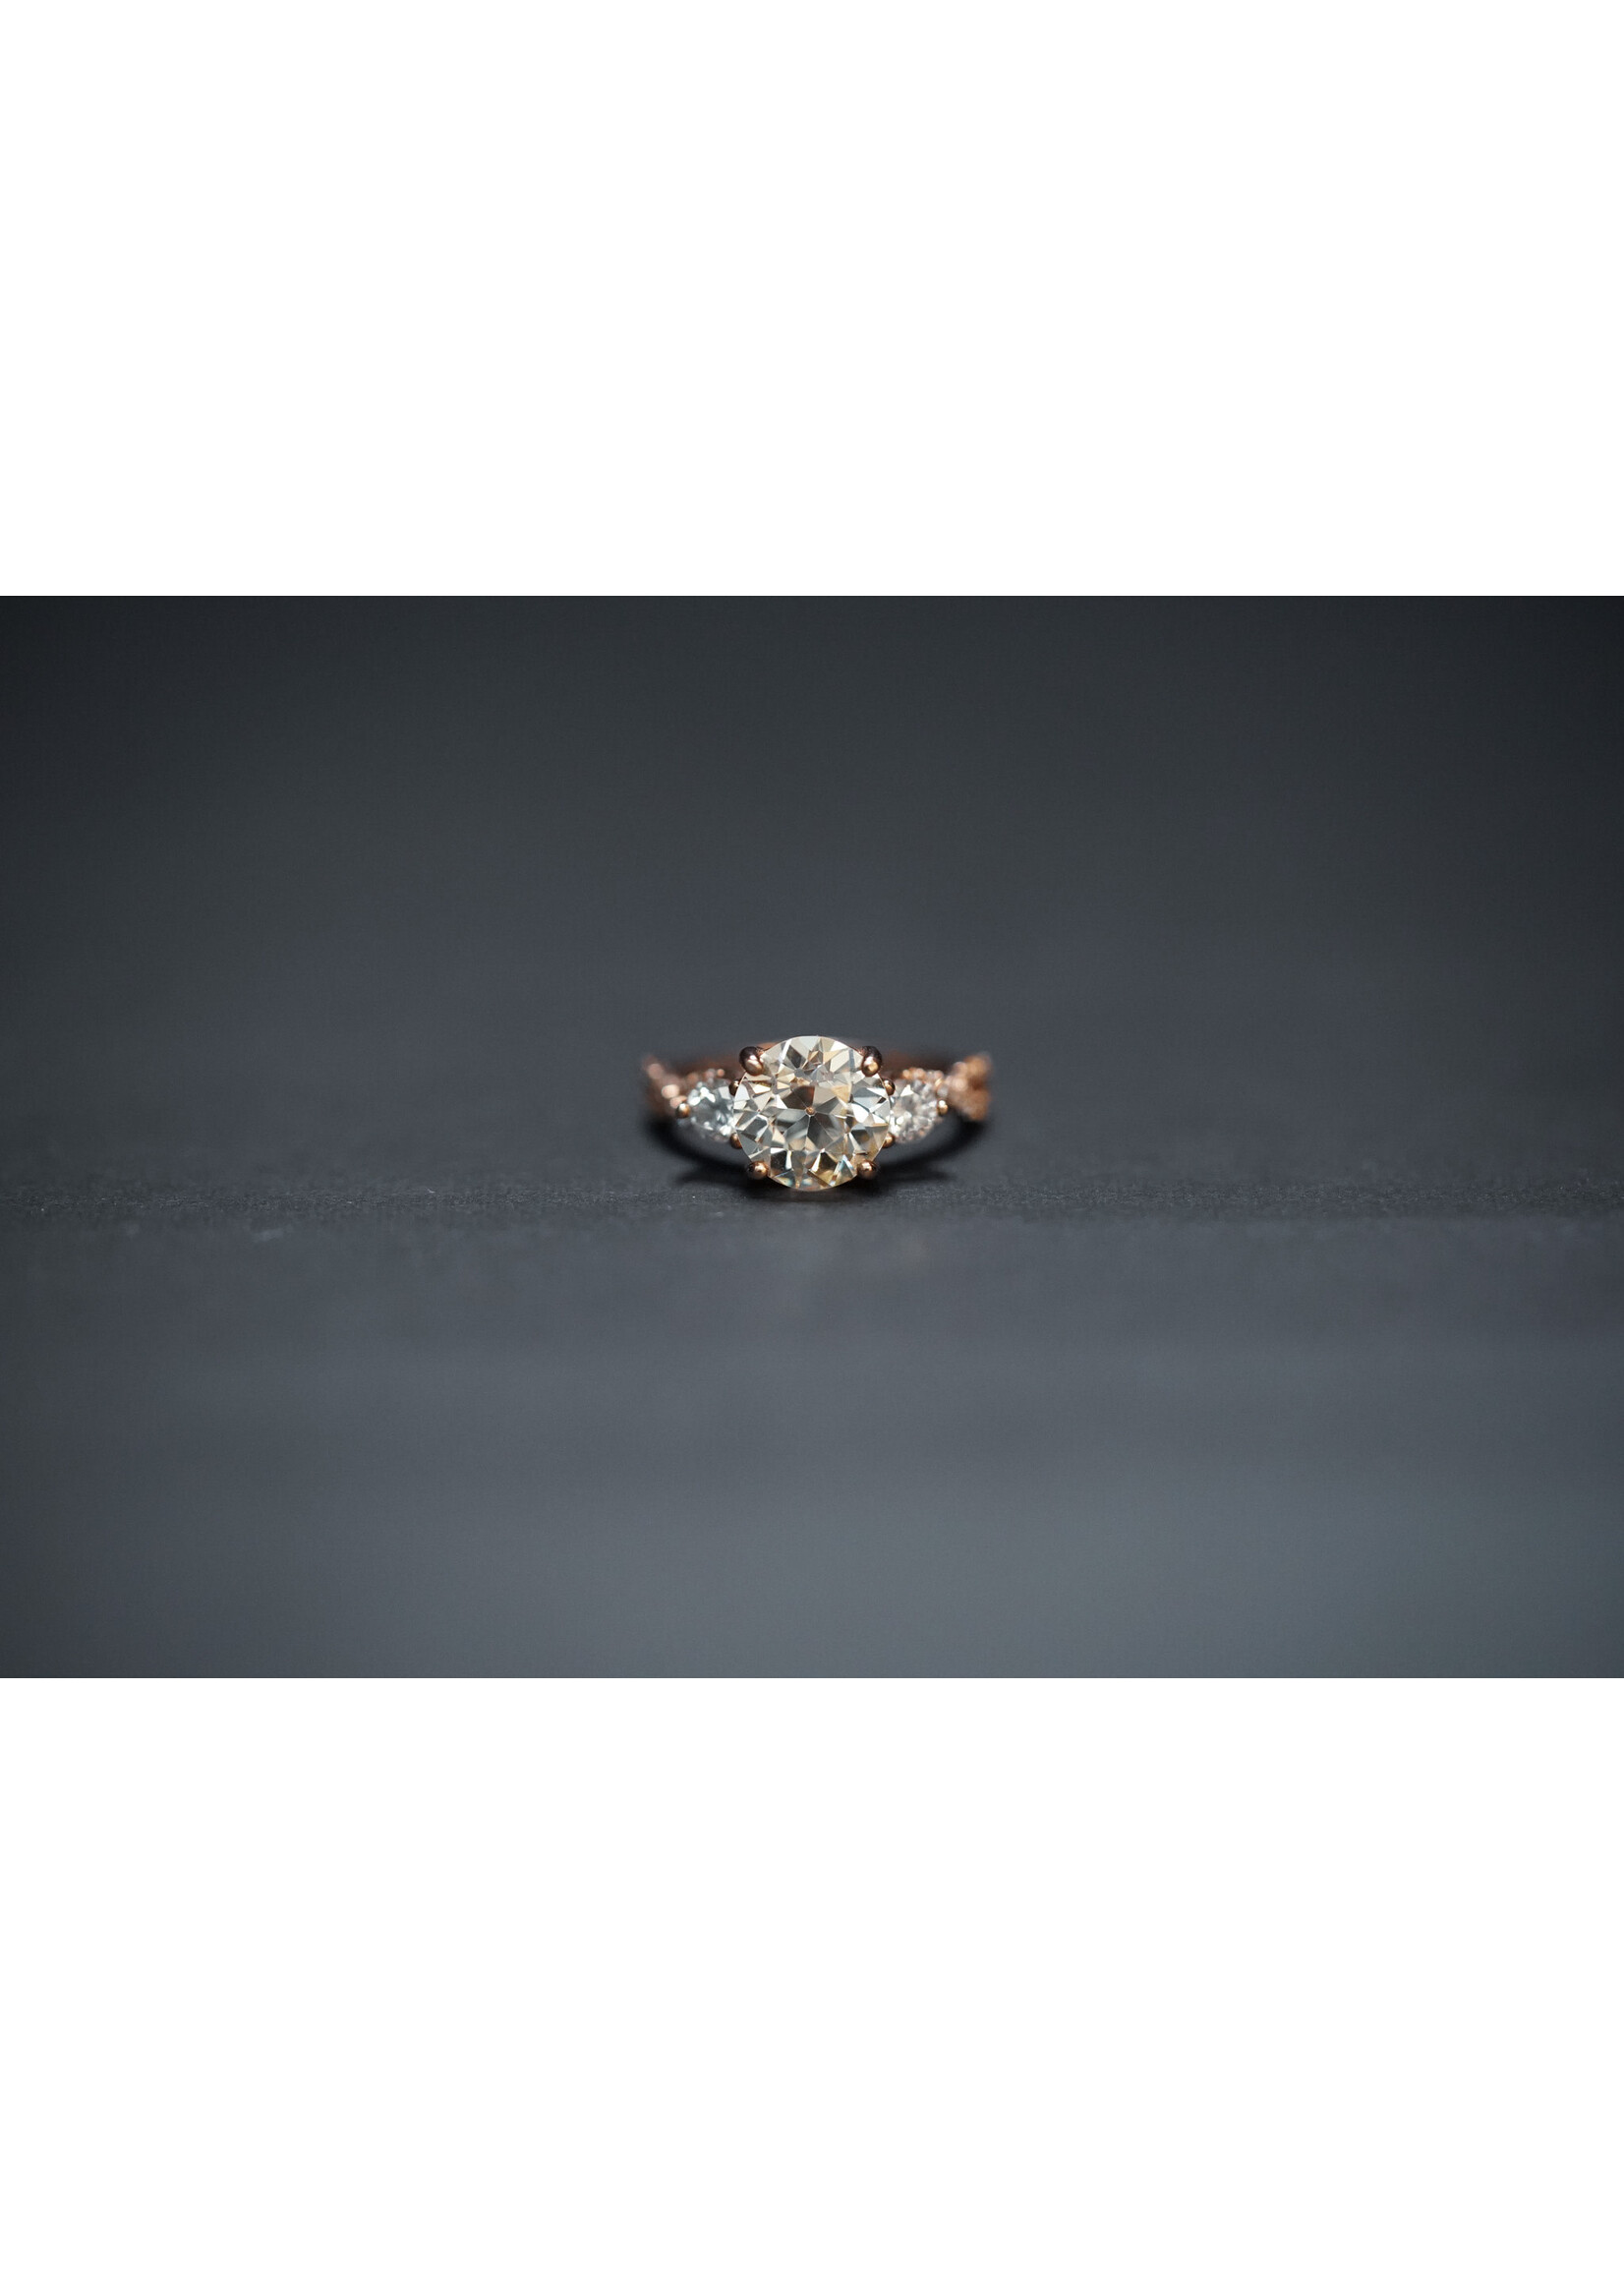 14KR 3.56g 3.10ctw (2.40ctr) L-M/VS1 European Cut Diamond Engagement Ring (size 5)